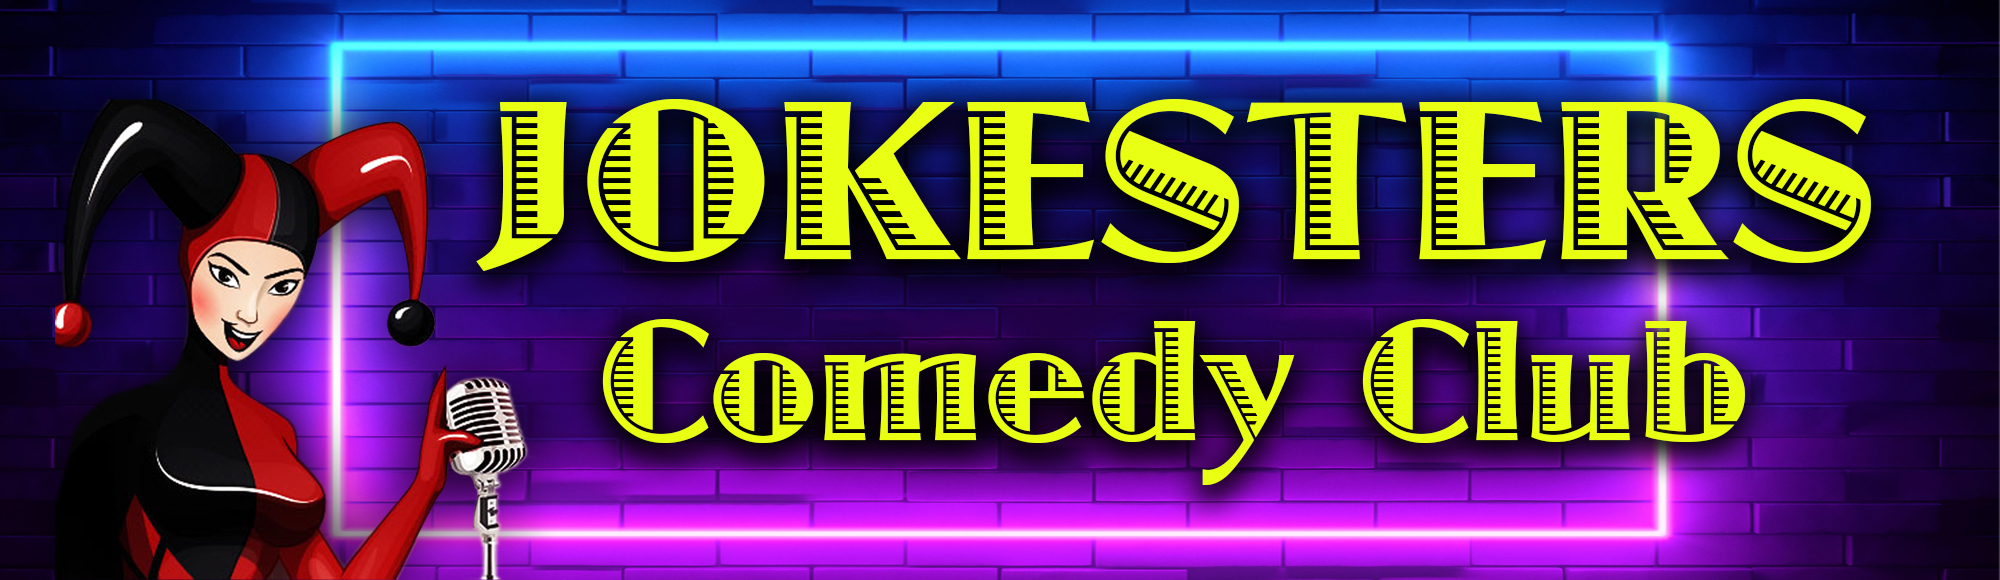 Jokesters Comedy Club show